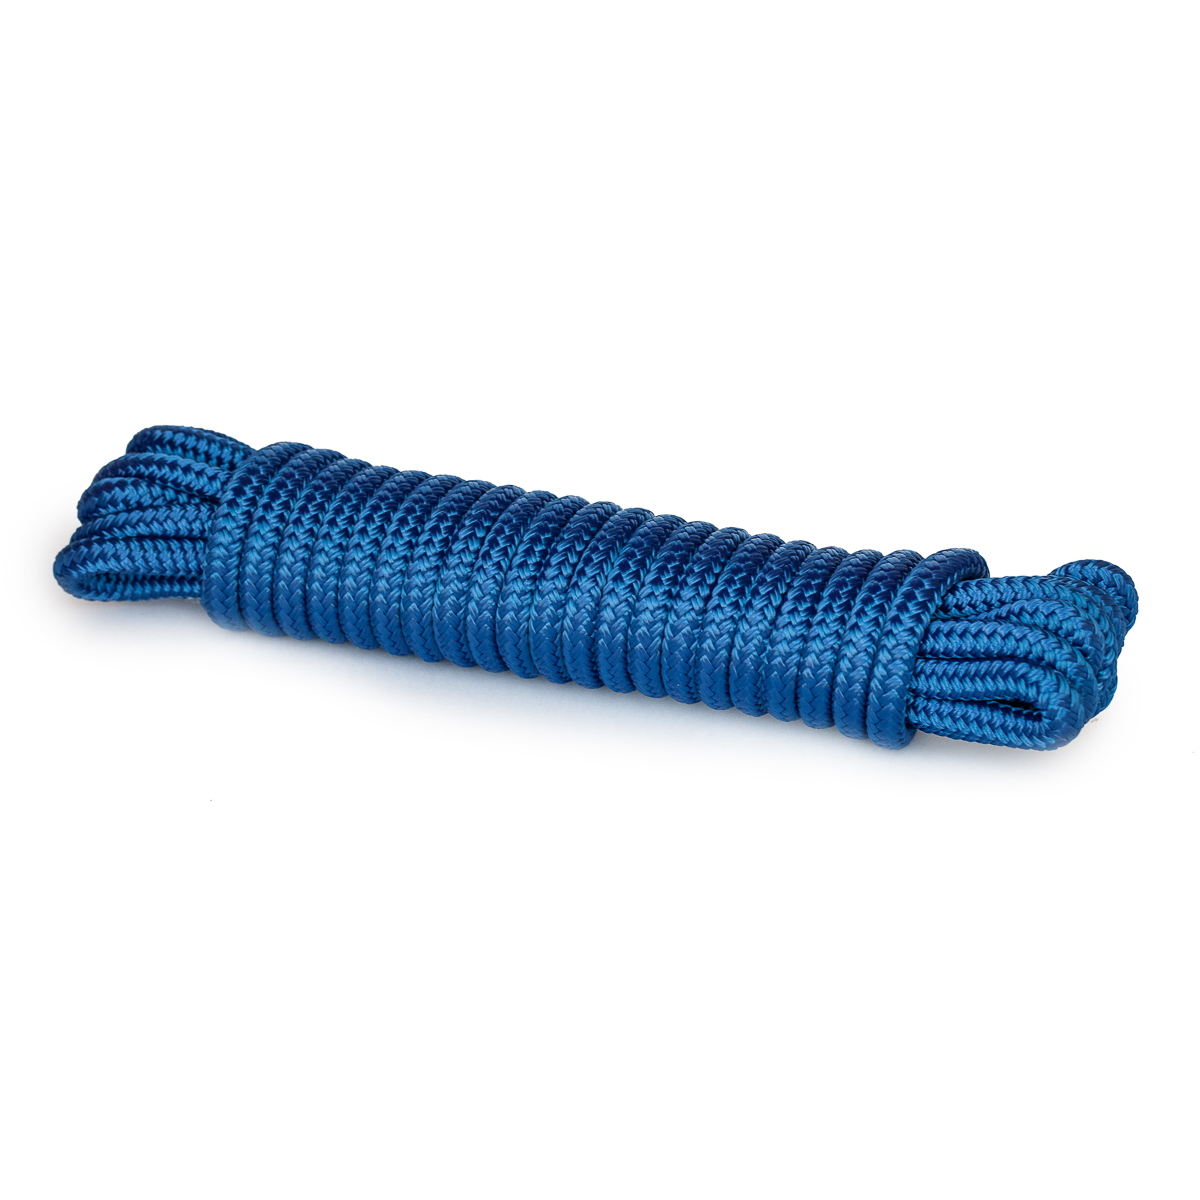 Шнур плетеный швартовый (Петроканат) 10 мм, 9 м, синий